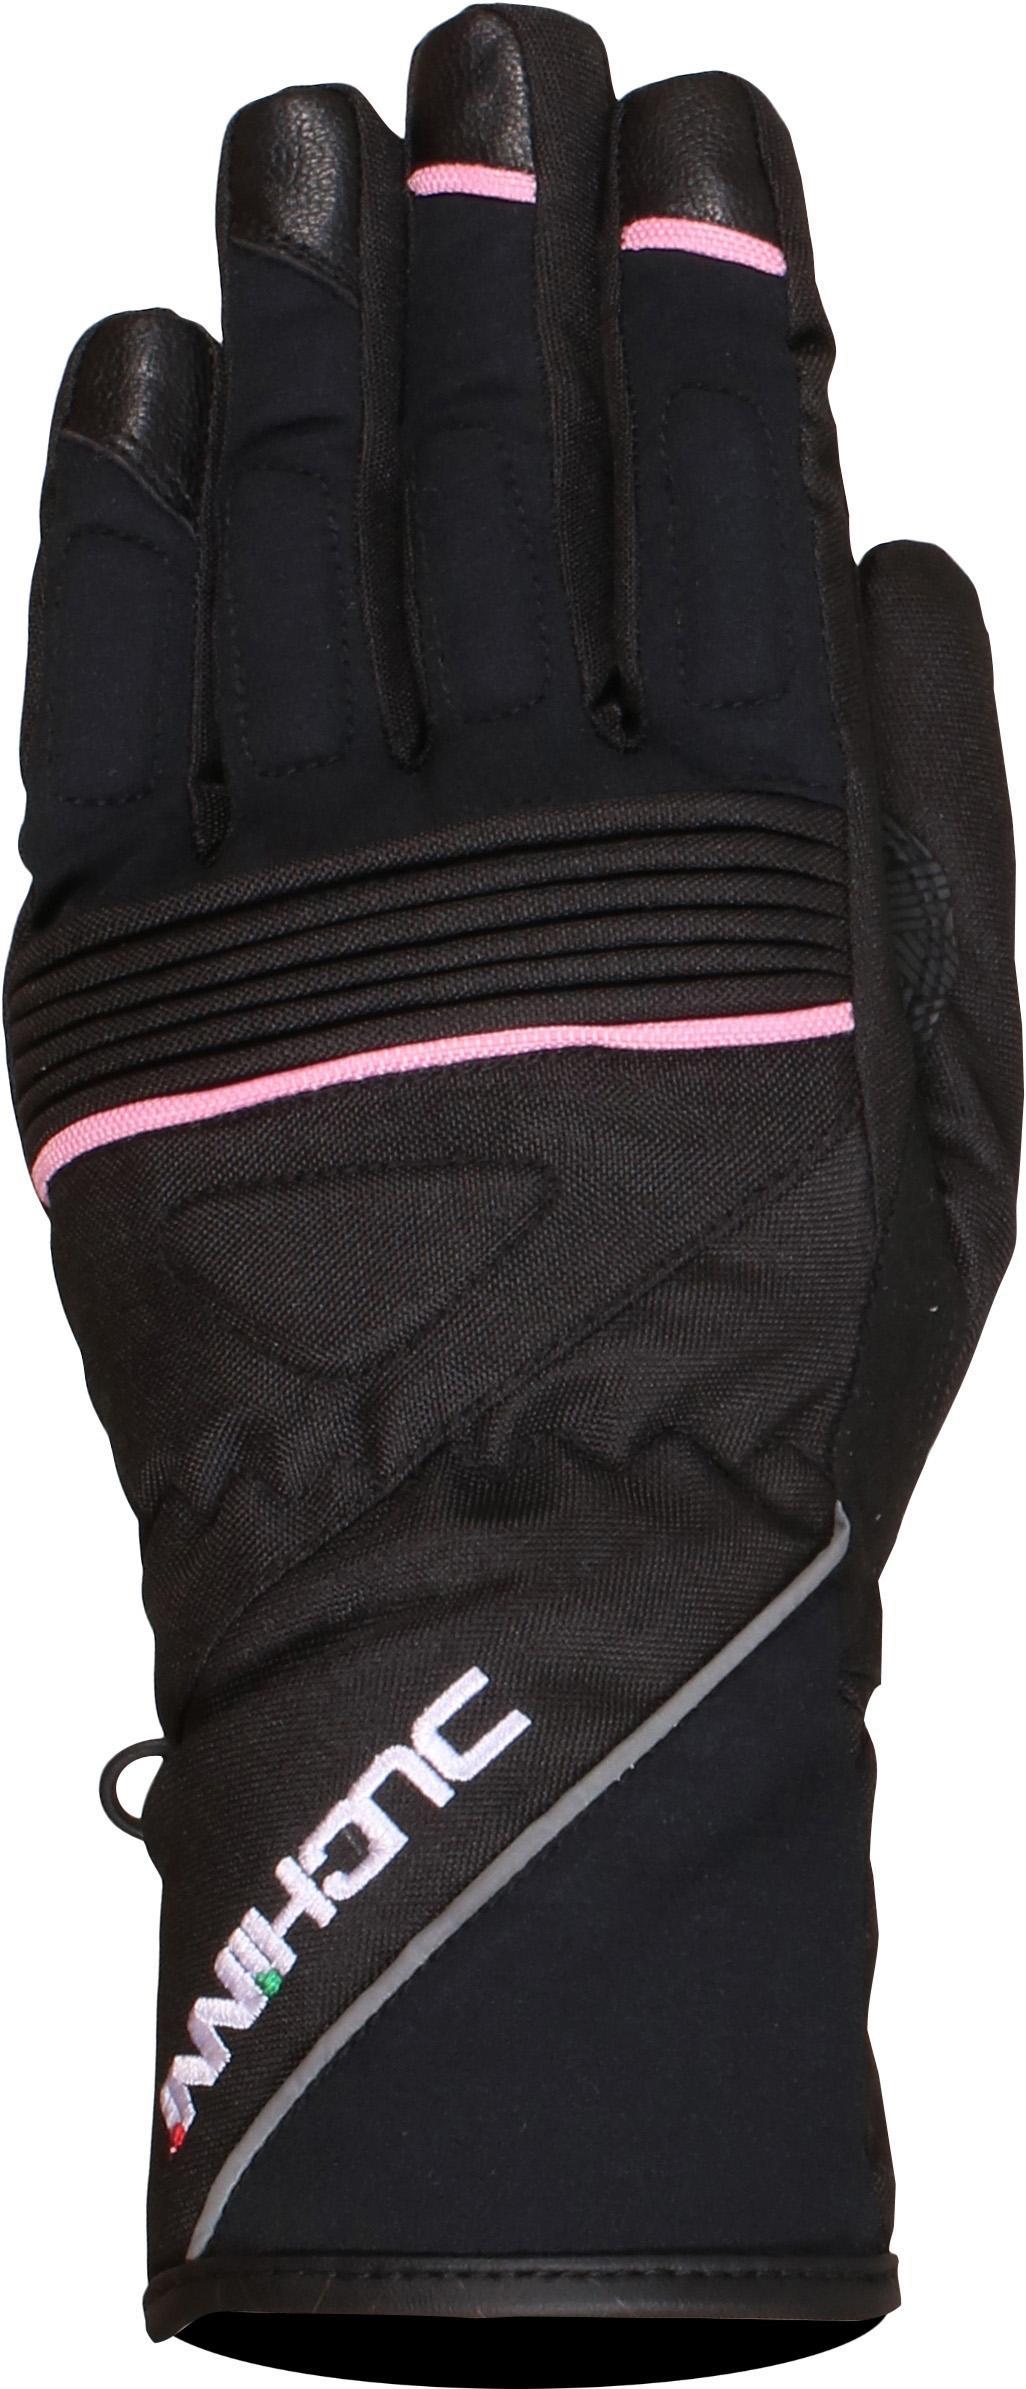 Duchinni Verona Women's Motorcycle Gloves - Black And Pink, Xs